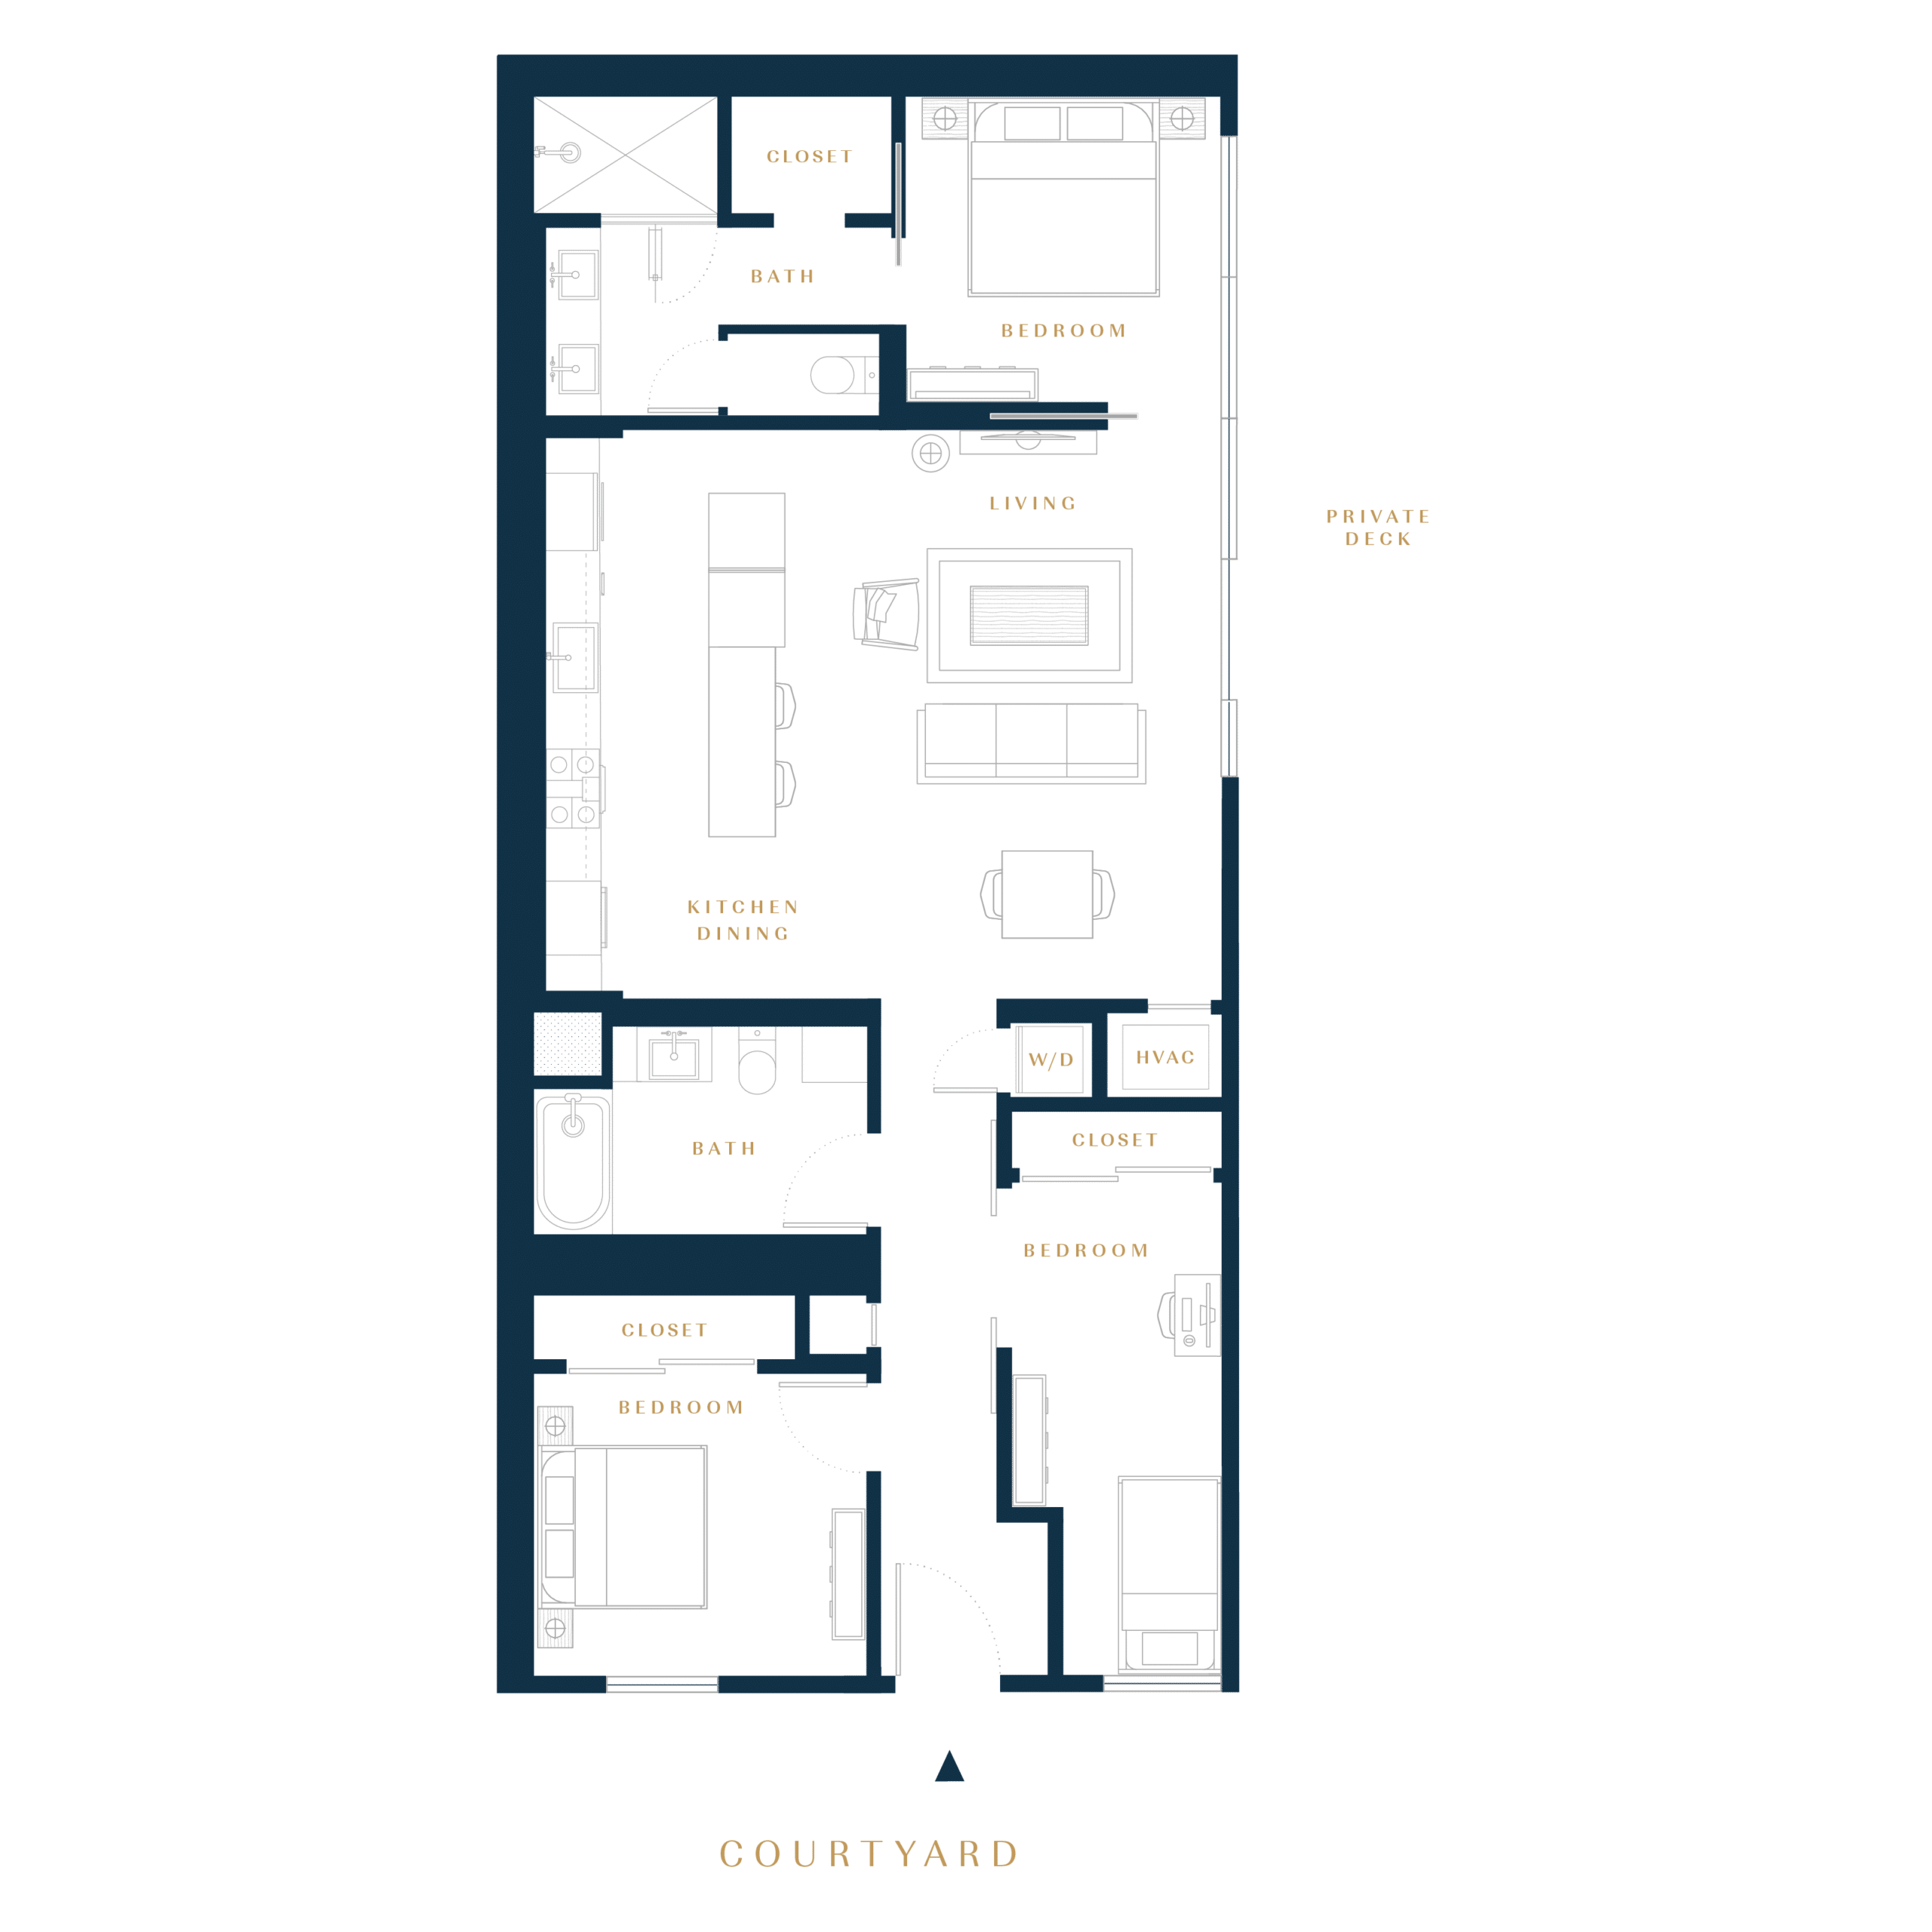 Residence 2G condo floor plan in San Francisco